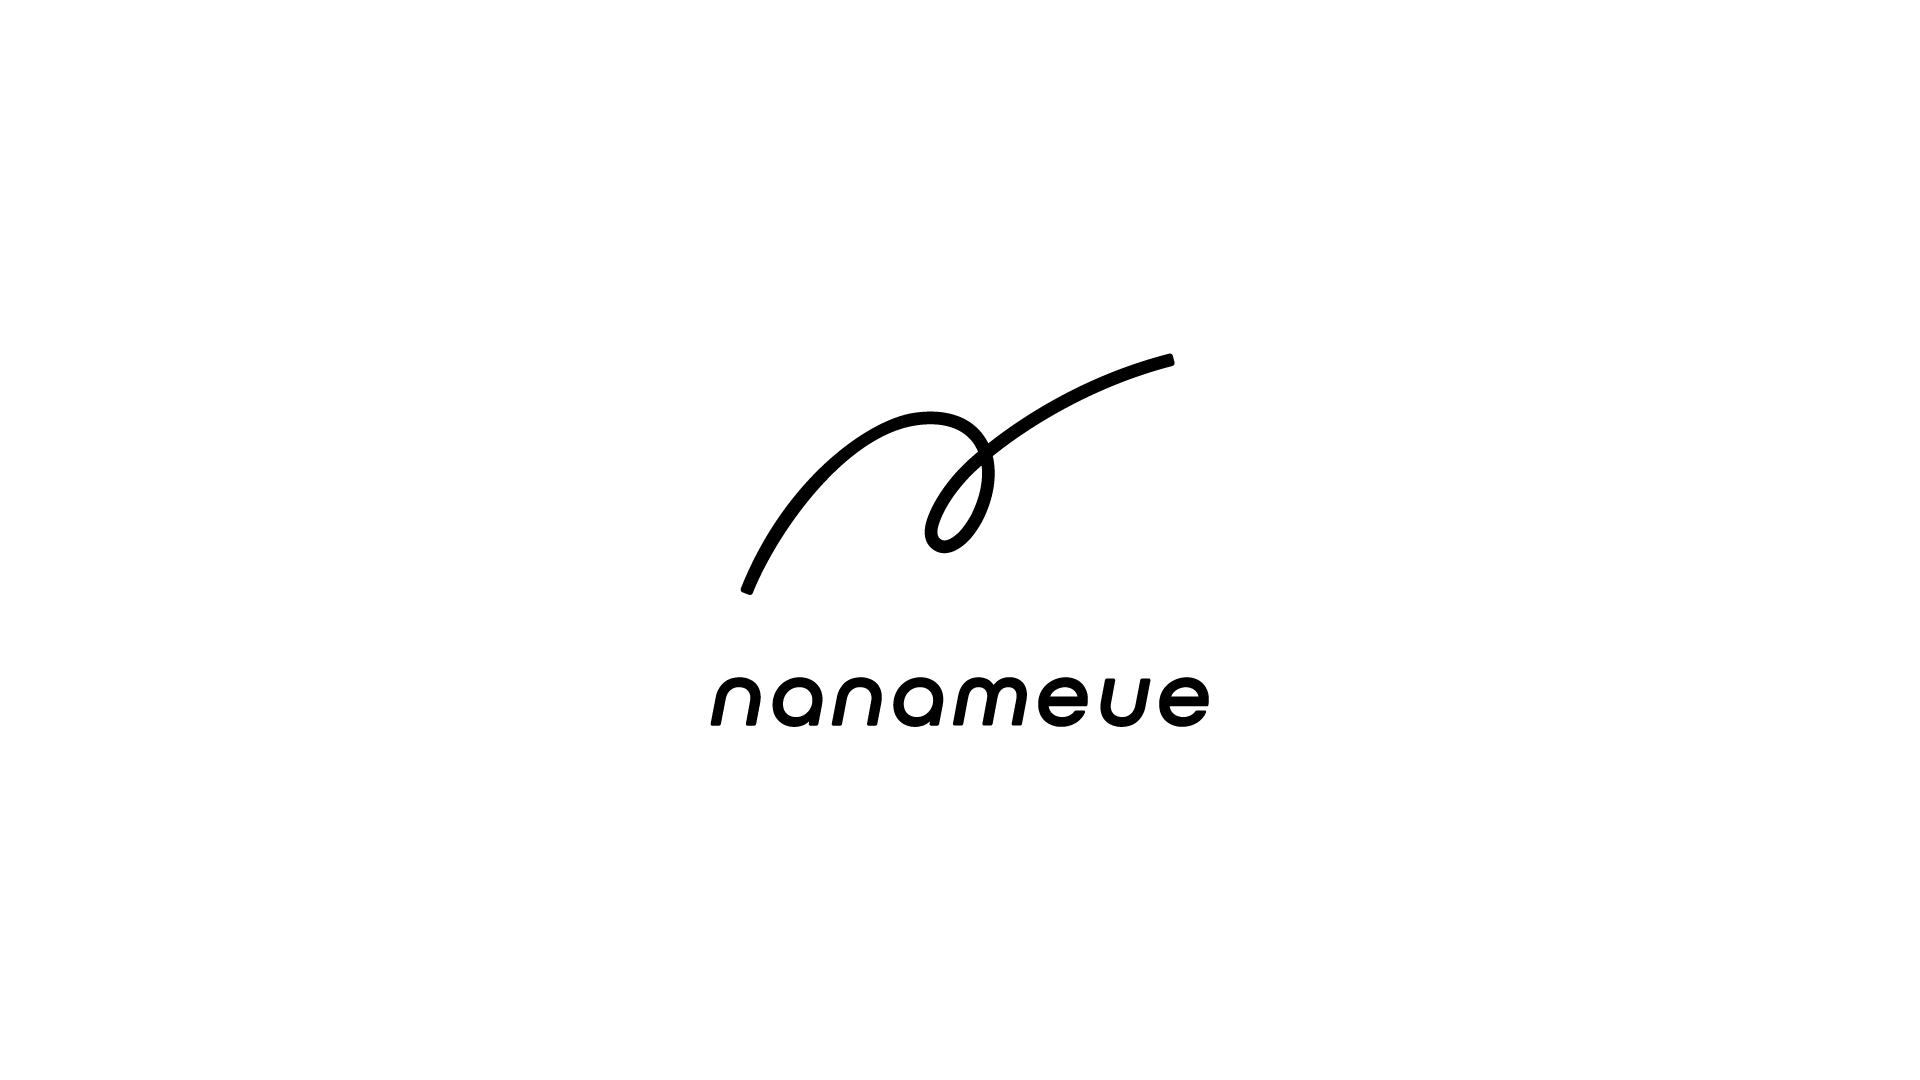 nanameue